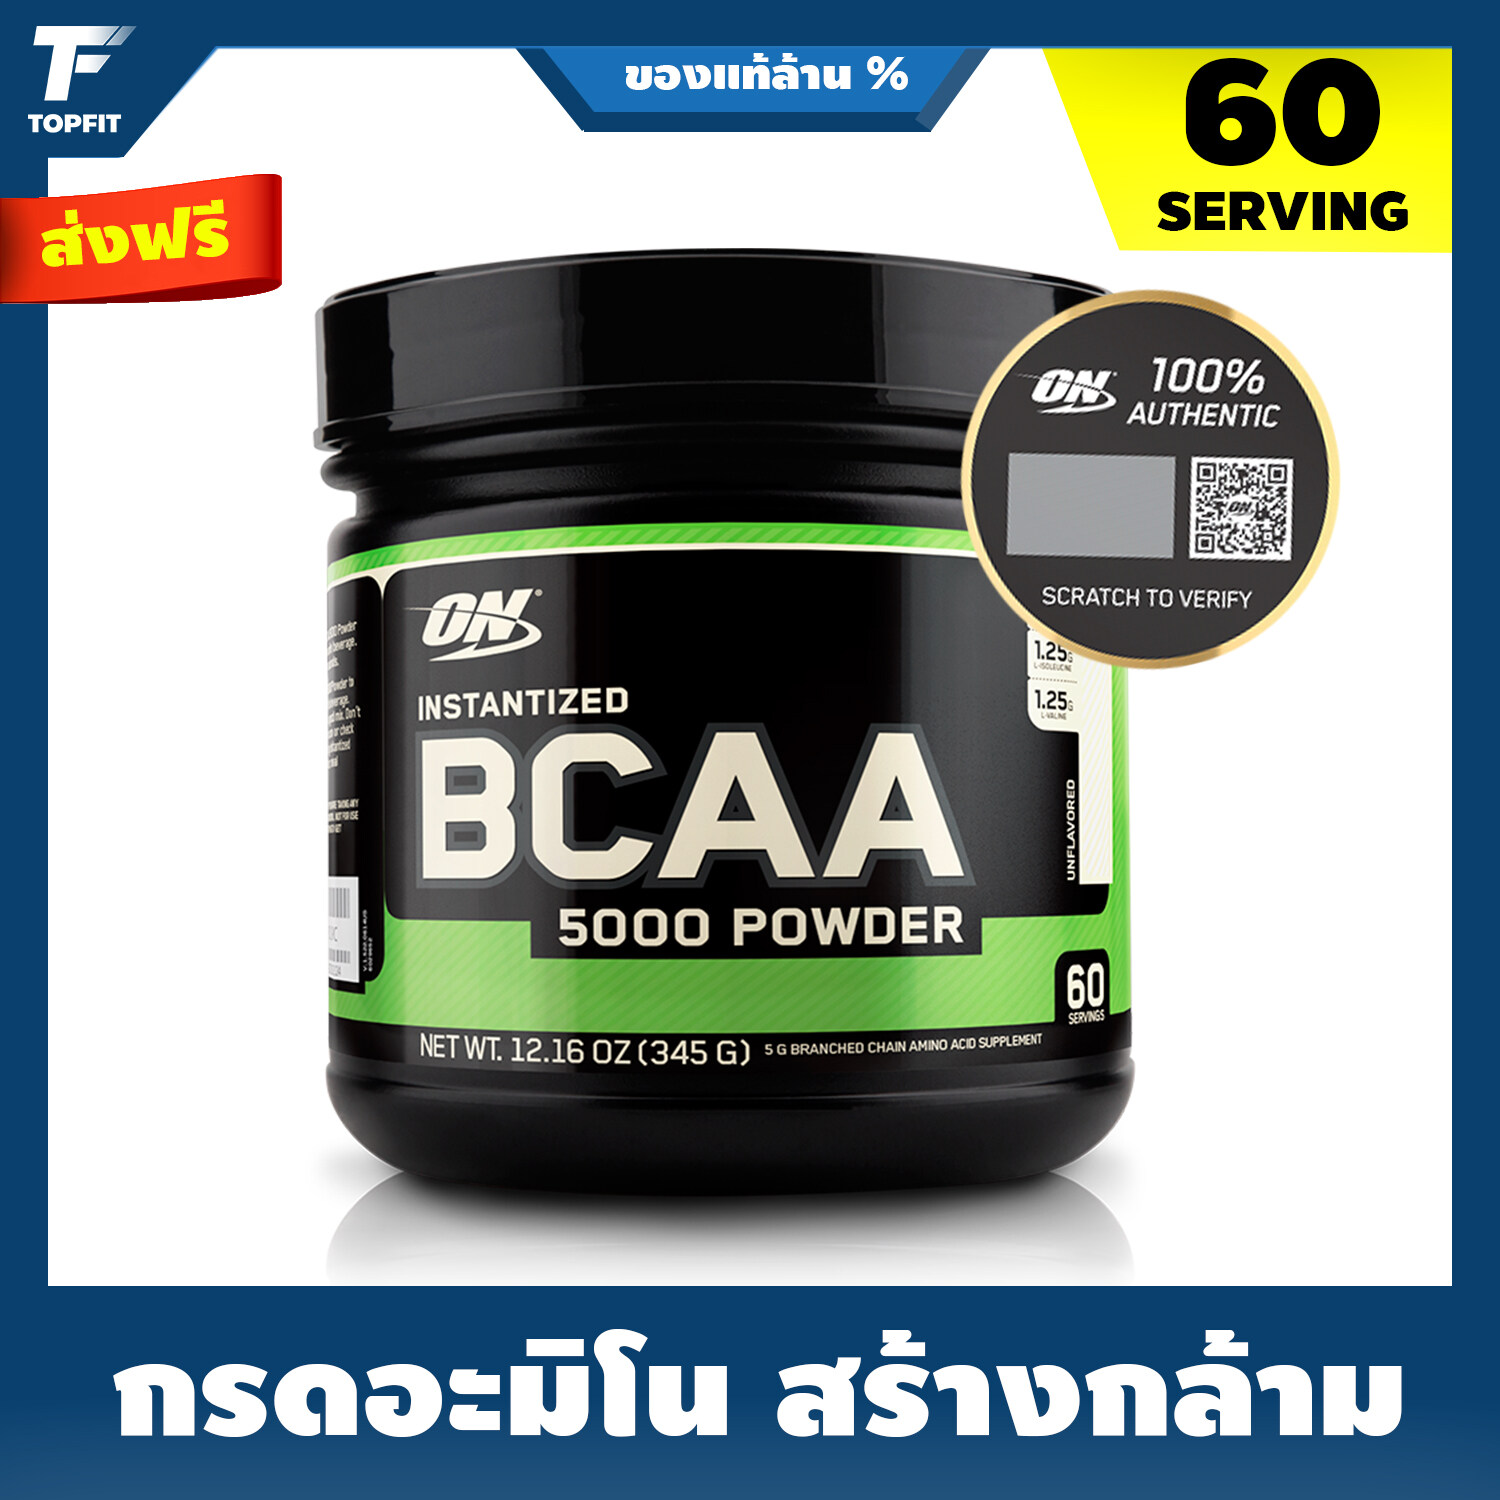 Optimum Nutrition BCAA 5000 Powder (60 SERVING) กรดอะมิโนเสริมสร้างกล้ามเนื้อ